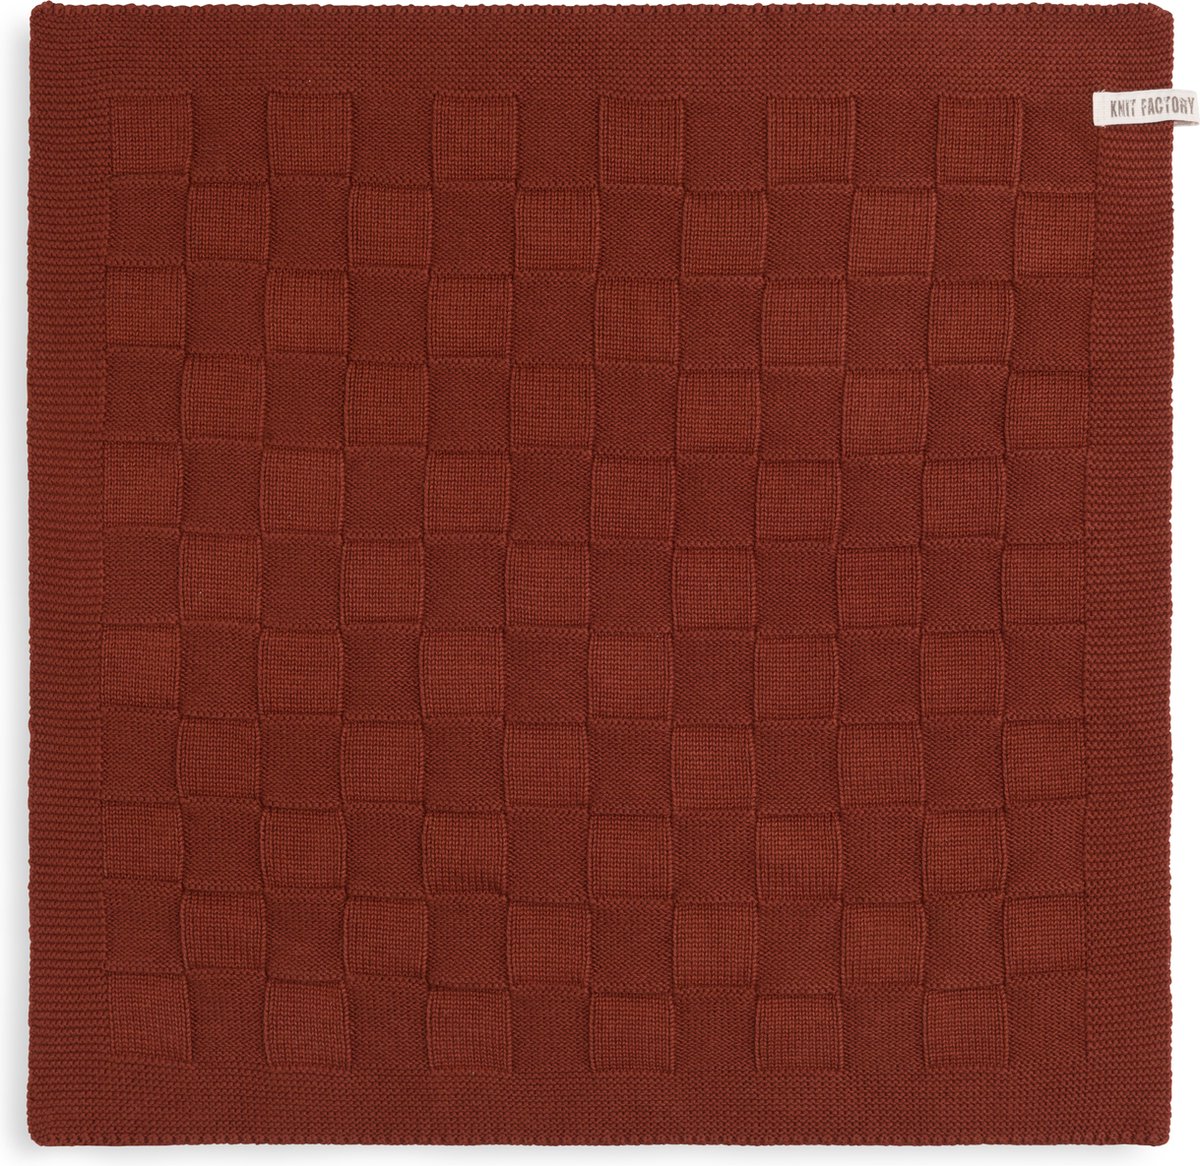 Knit Factory Gebreide Keukendoek - Keukenhanddoek Uni - Handdoek - Vaatdoek - Keuken doek - Roest - Rood - 50x50 cm